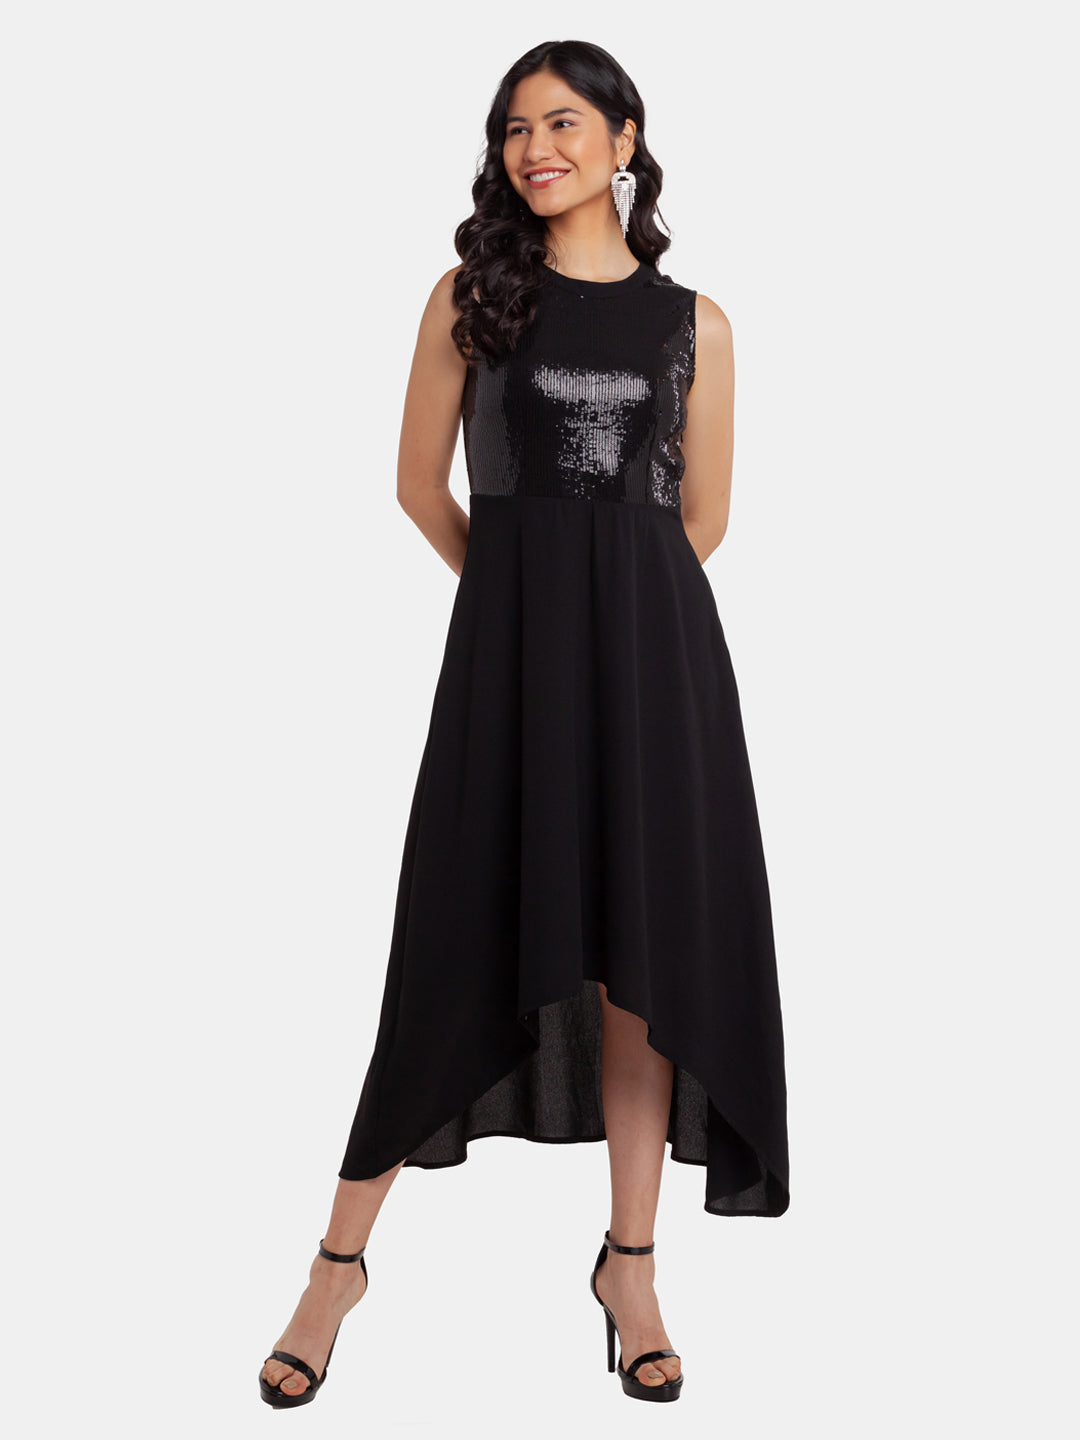 Black Embellished Regular Midi Dress For Women